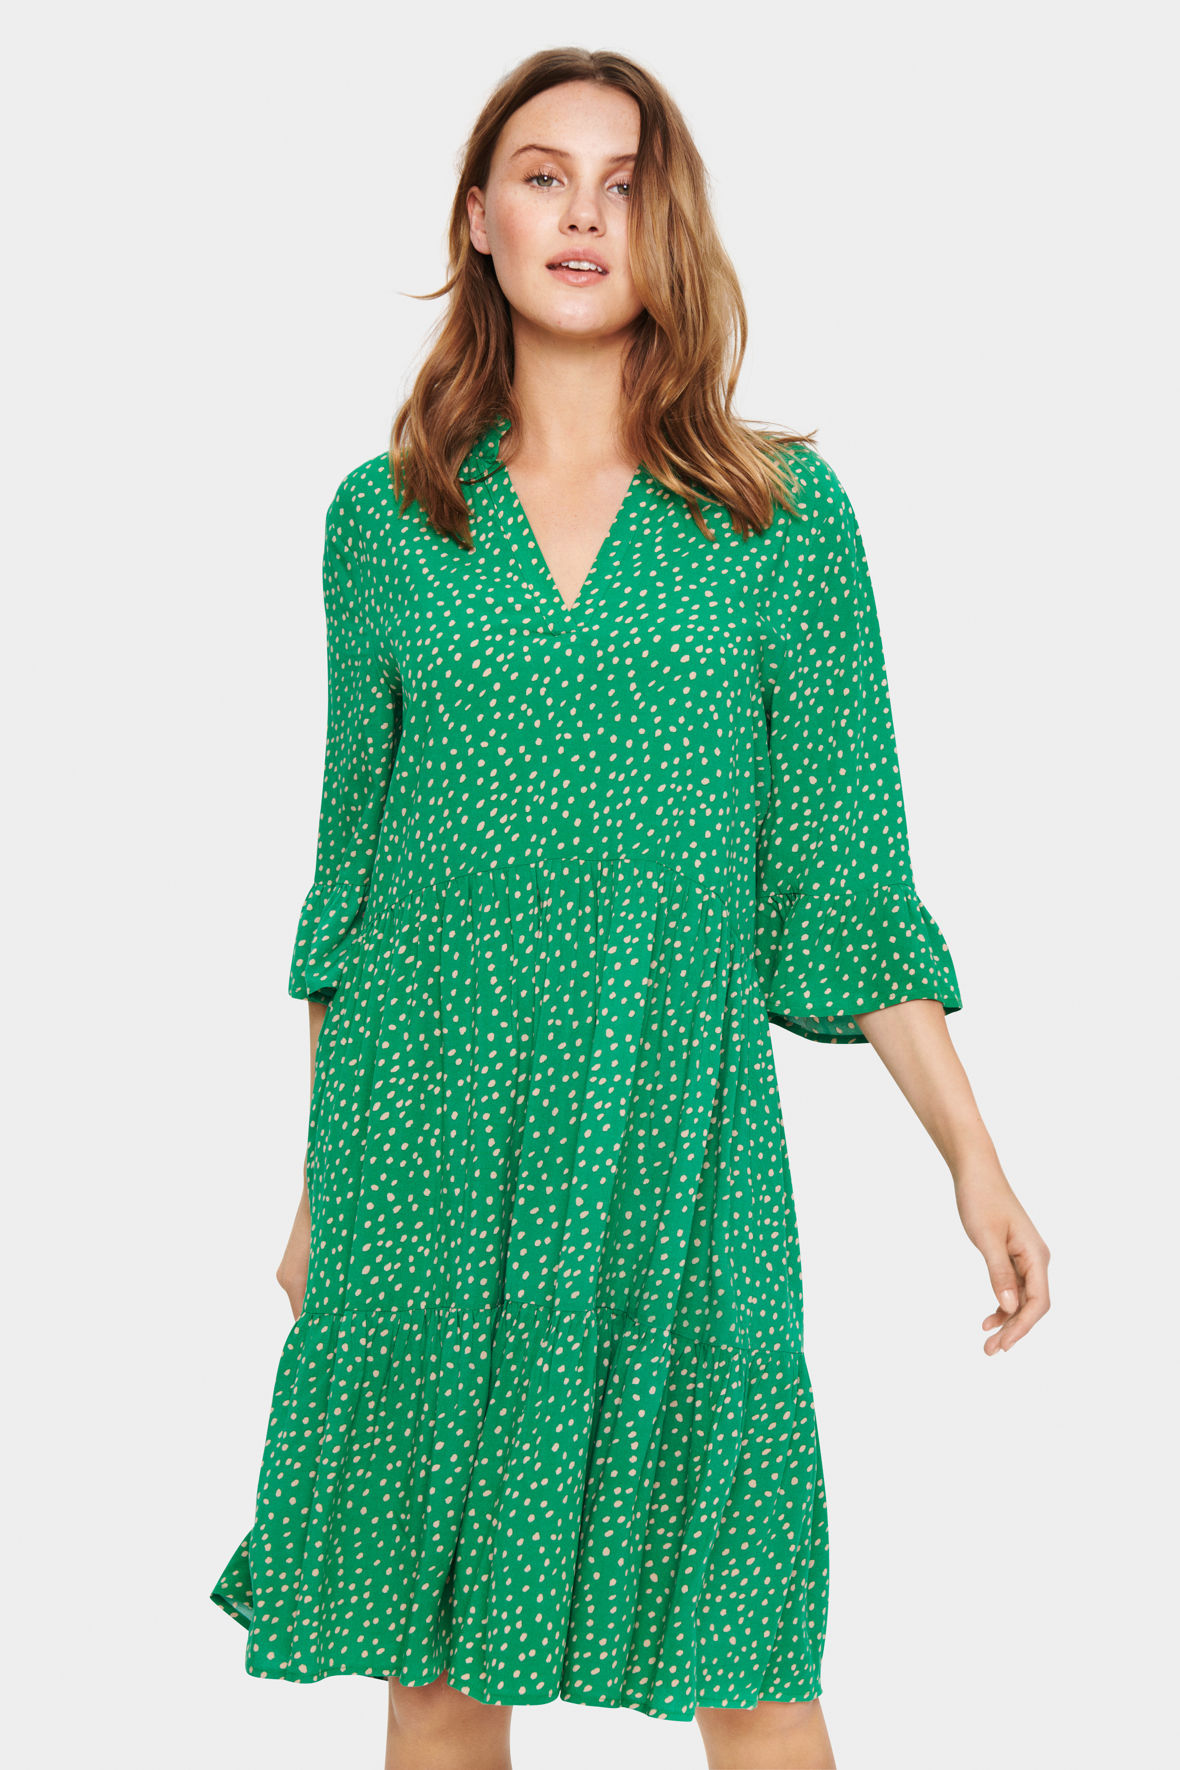 Saint Tropez Dress - sommerkjole smuk grøn -løst snit & flagrende - Hos  Lohse